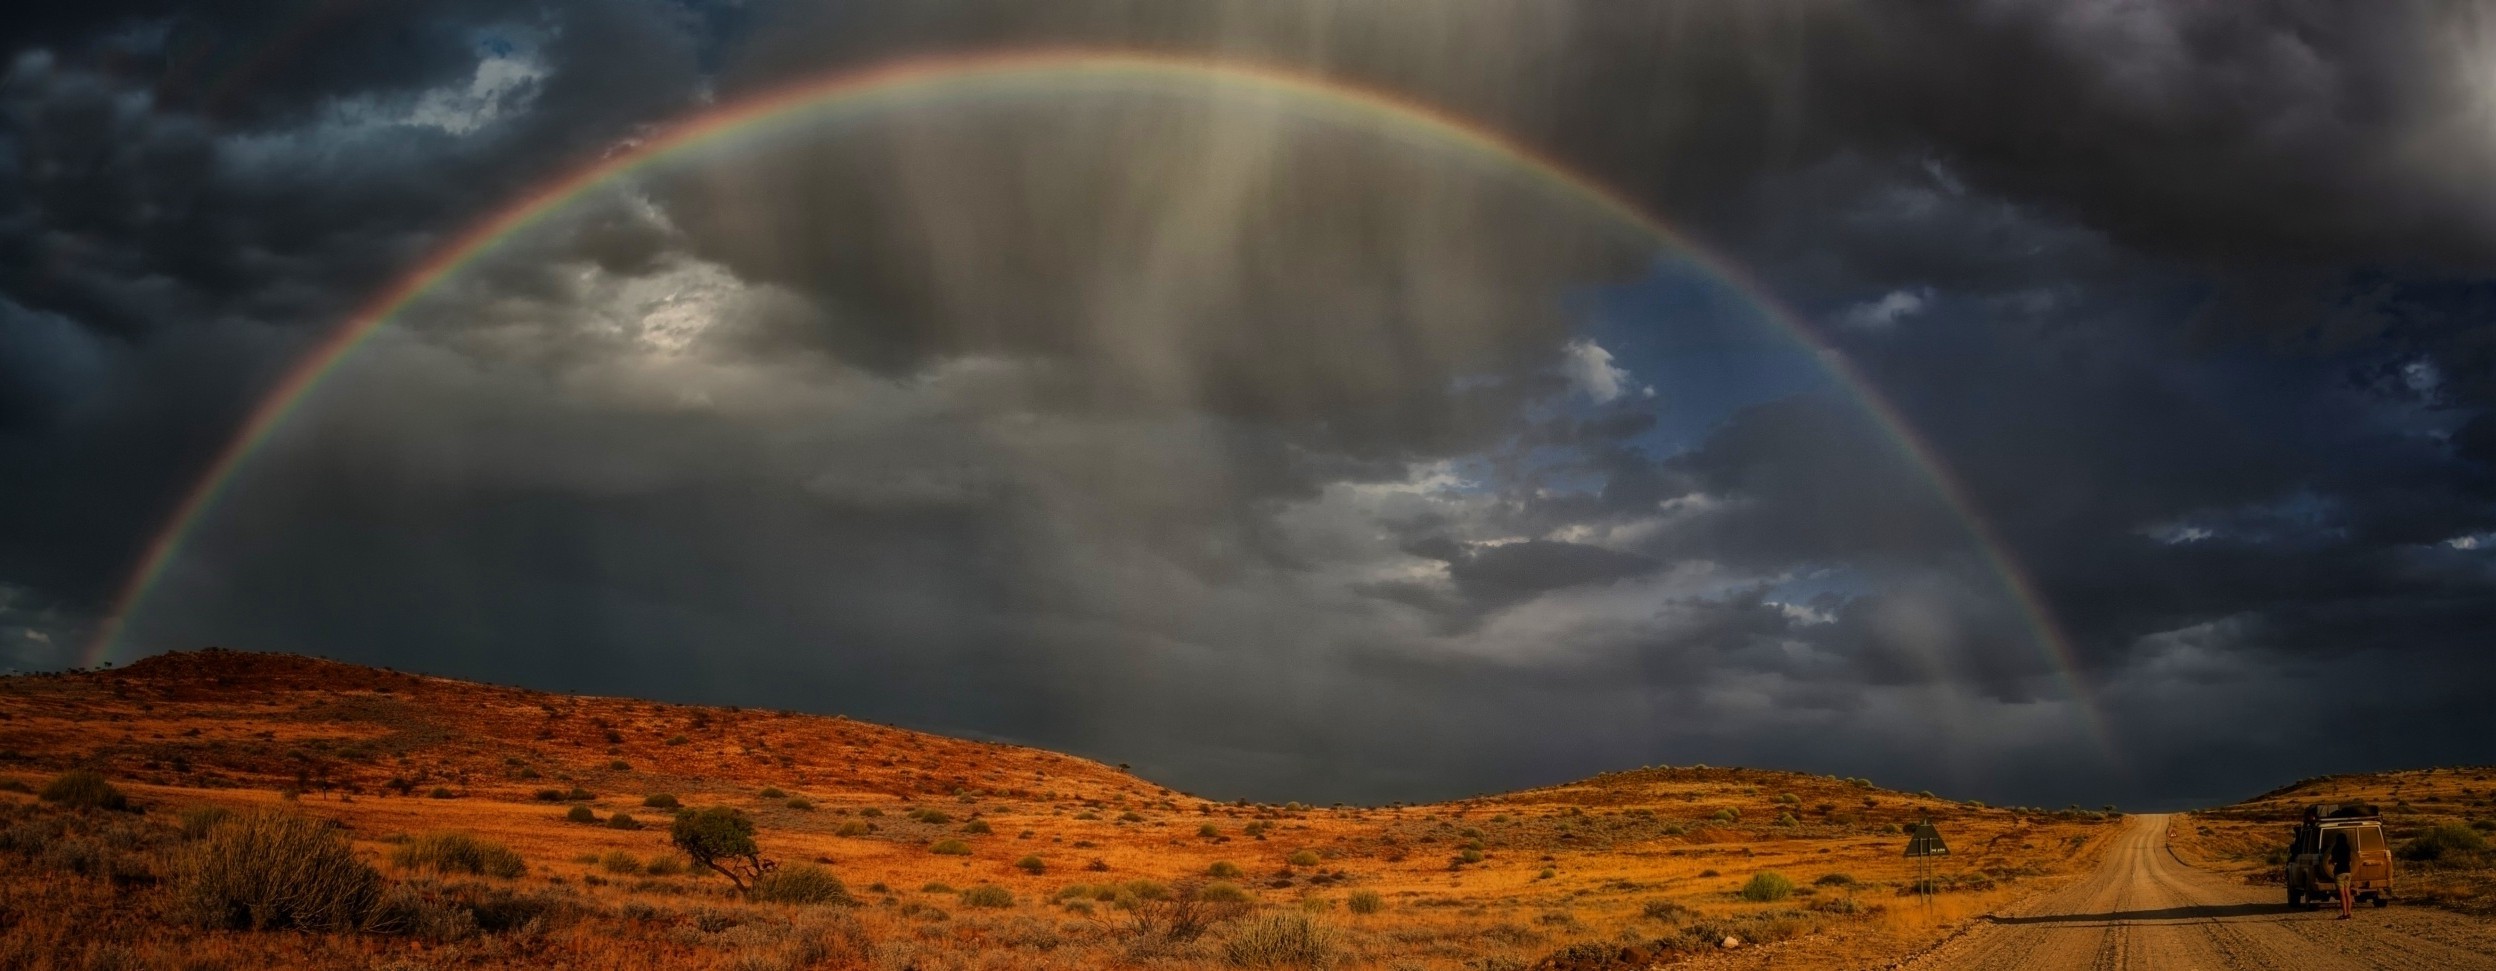 landscape, Nature, Africa, Namibia, Rainbows, Steppe, Dirt Road, Clouds, Rain, 4x4, Shrubs Wallpaper